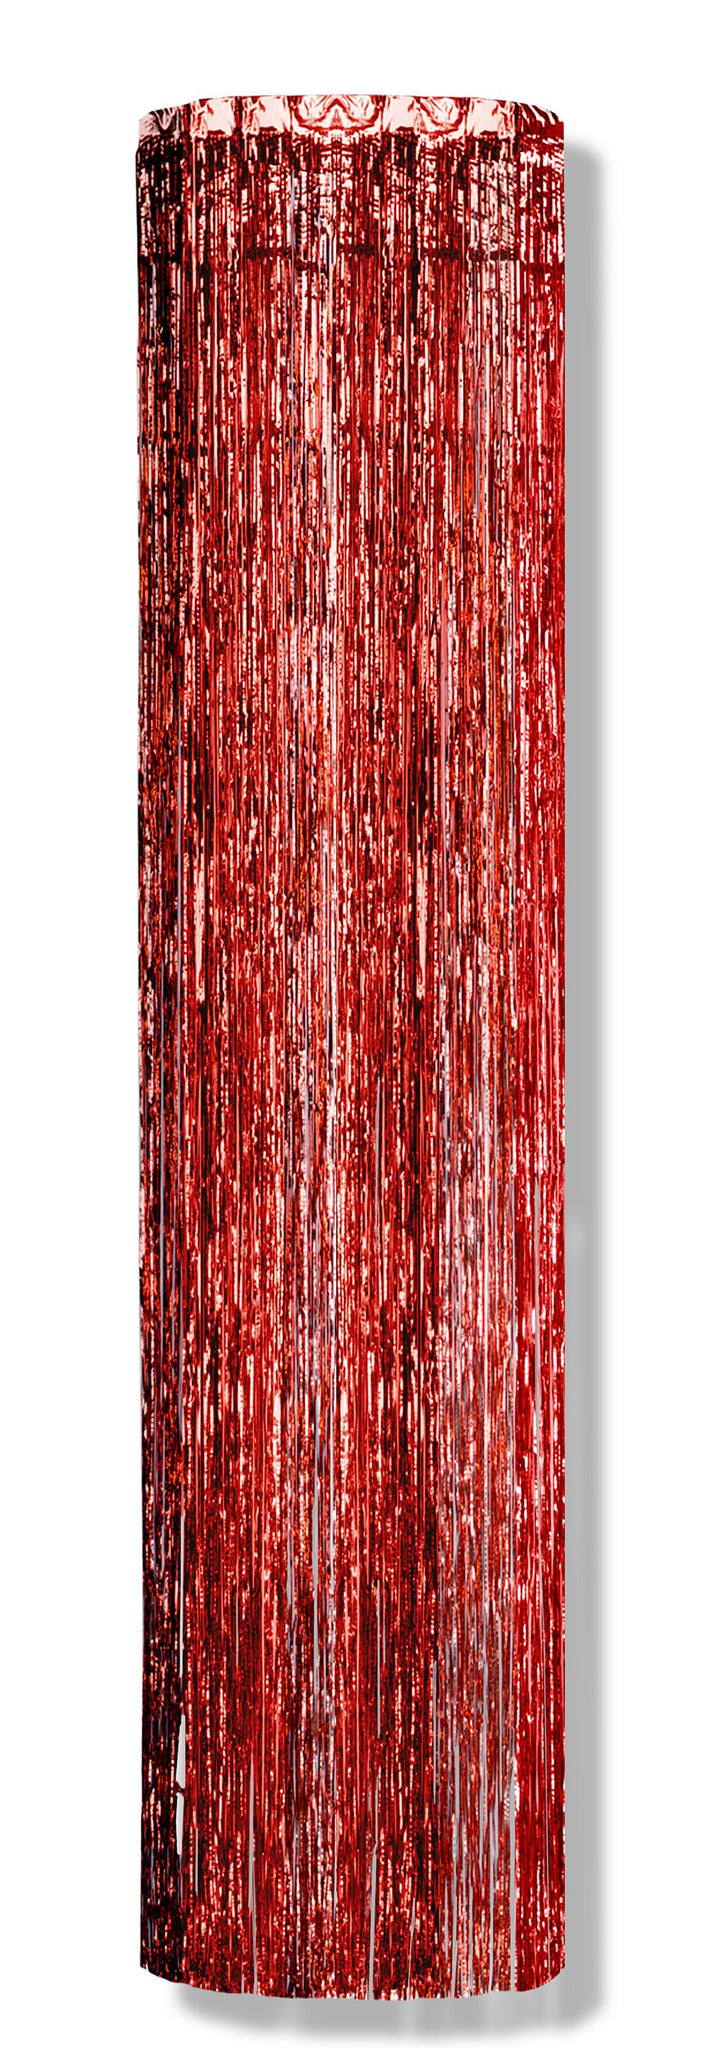 Red Metallic Column - 8ft x 1ft